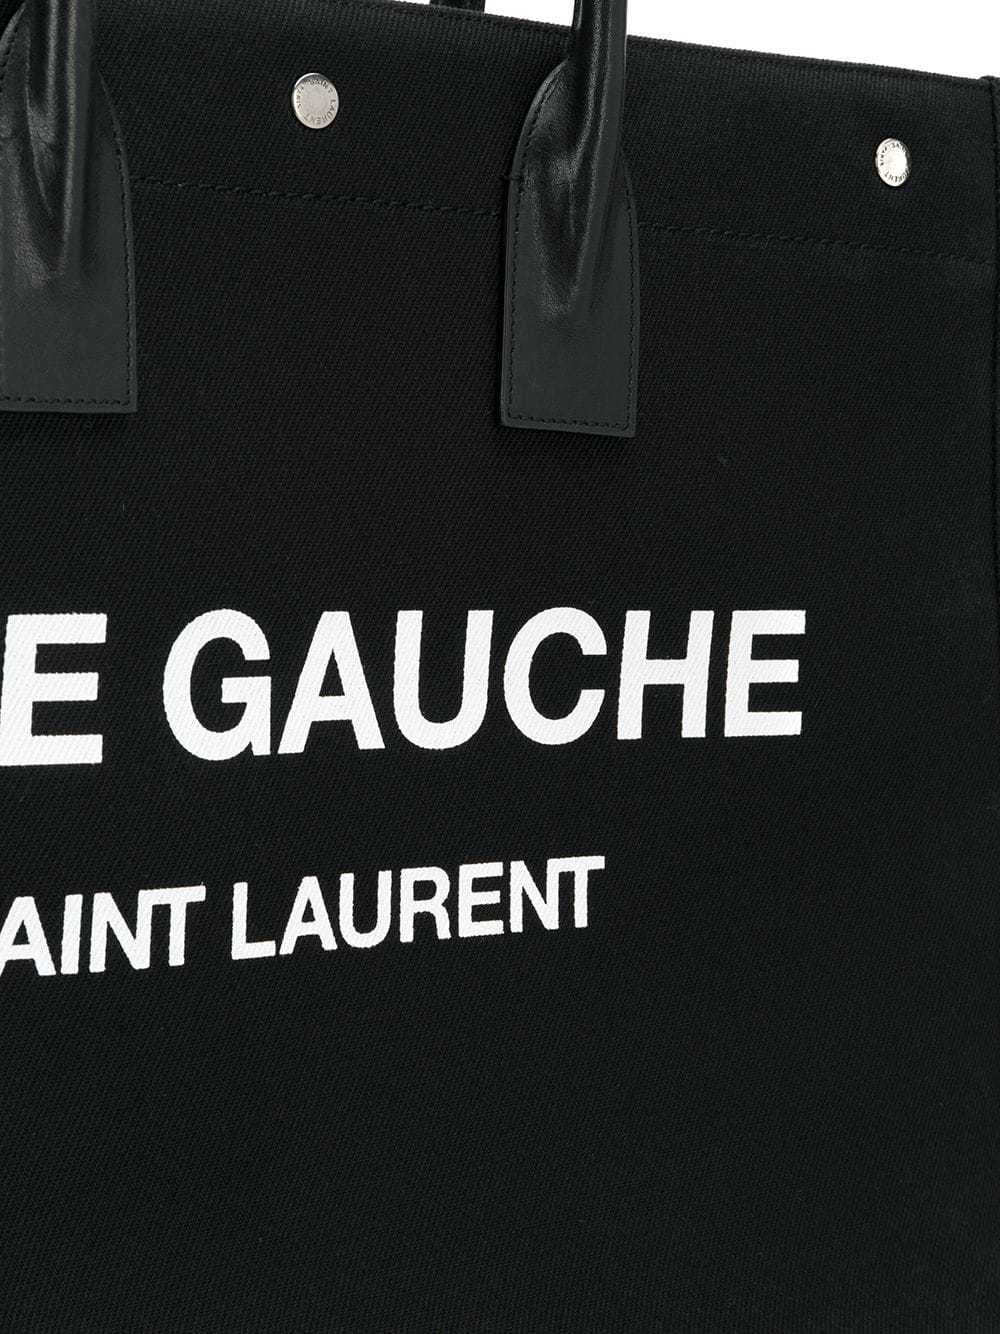 Noe Rive Gauche Logo Canvas Tote